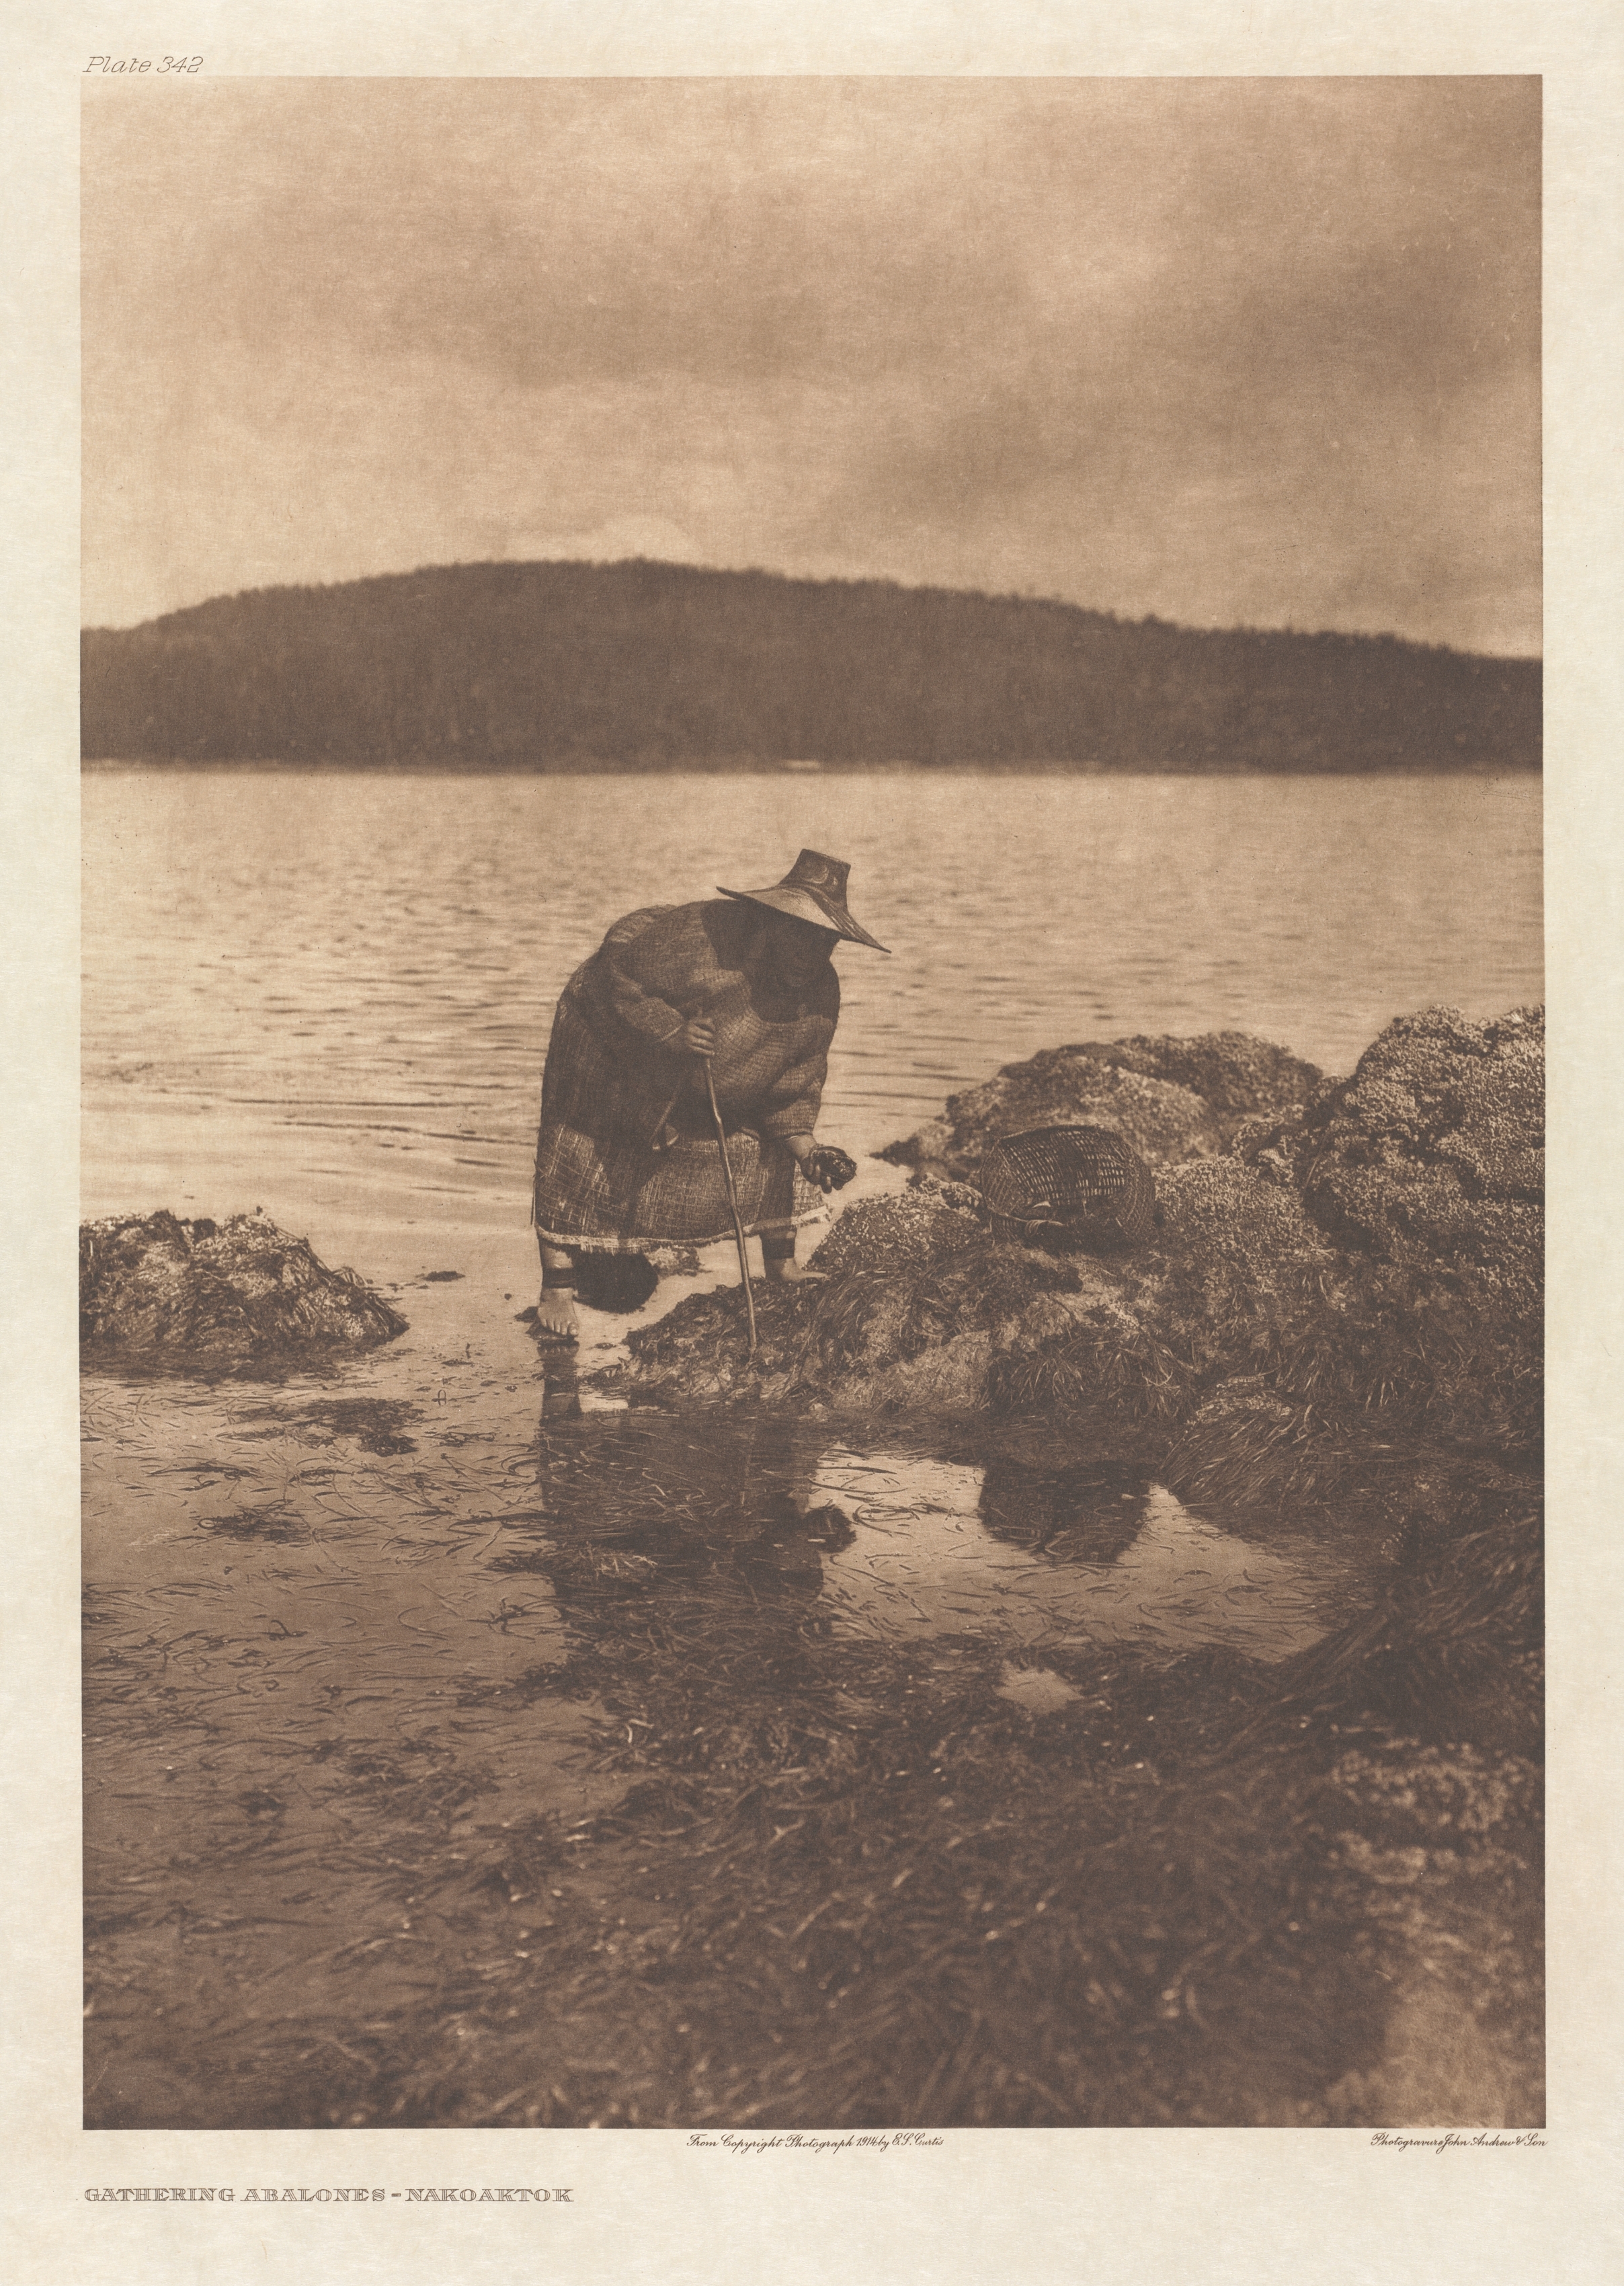 Portfolio X, Plate 342: Gathering Abalones - Nakoaktok